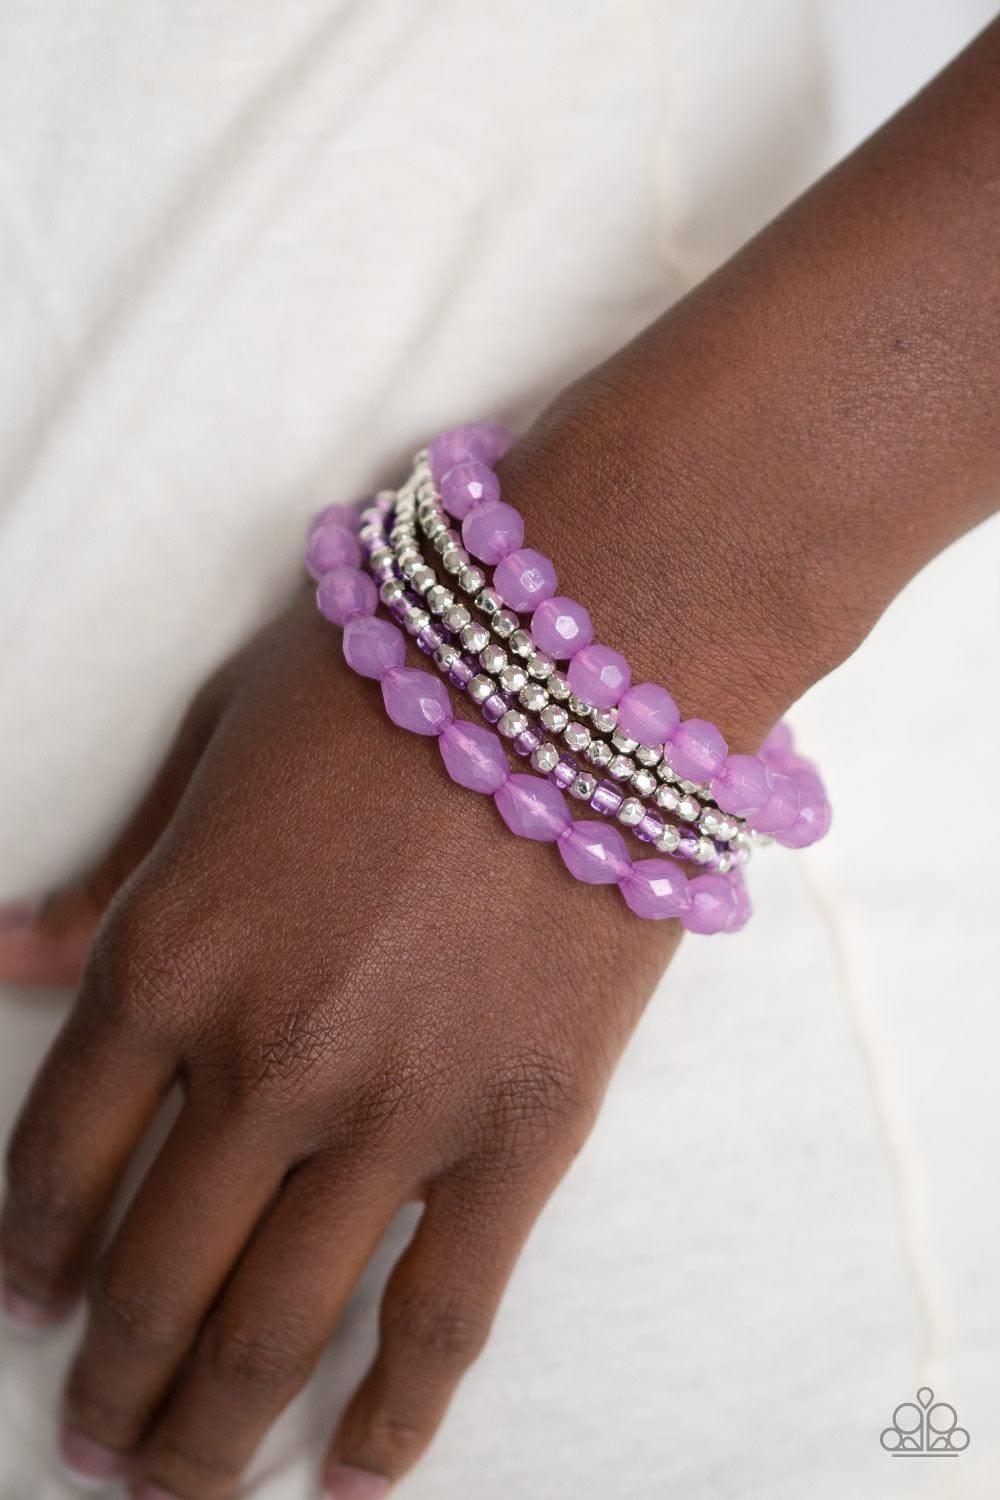 Paparazzi Accessories - Sugary Sweet - Purple Bracelet - Bling by JessieK